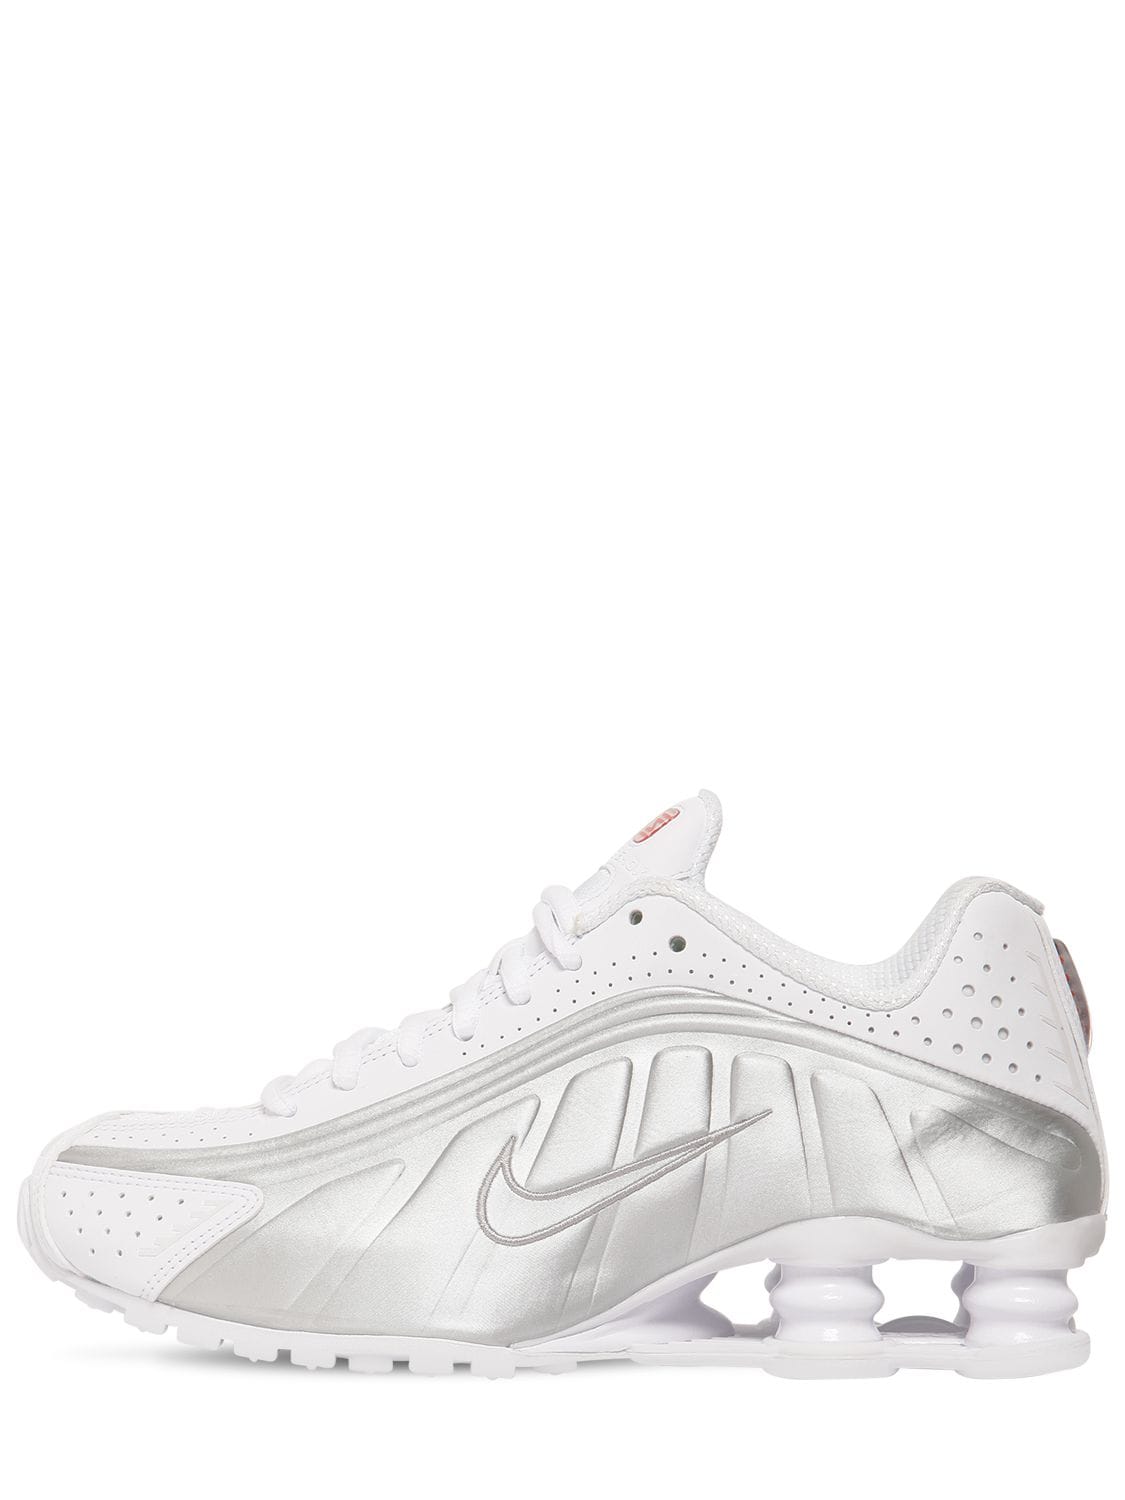 Nike Shox R4 Sneakers In White,silver